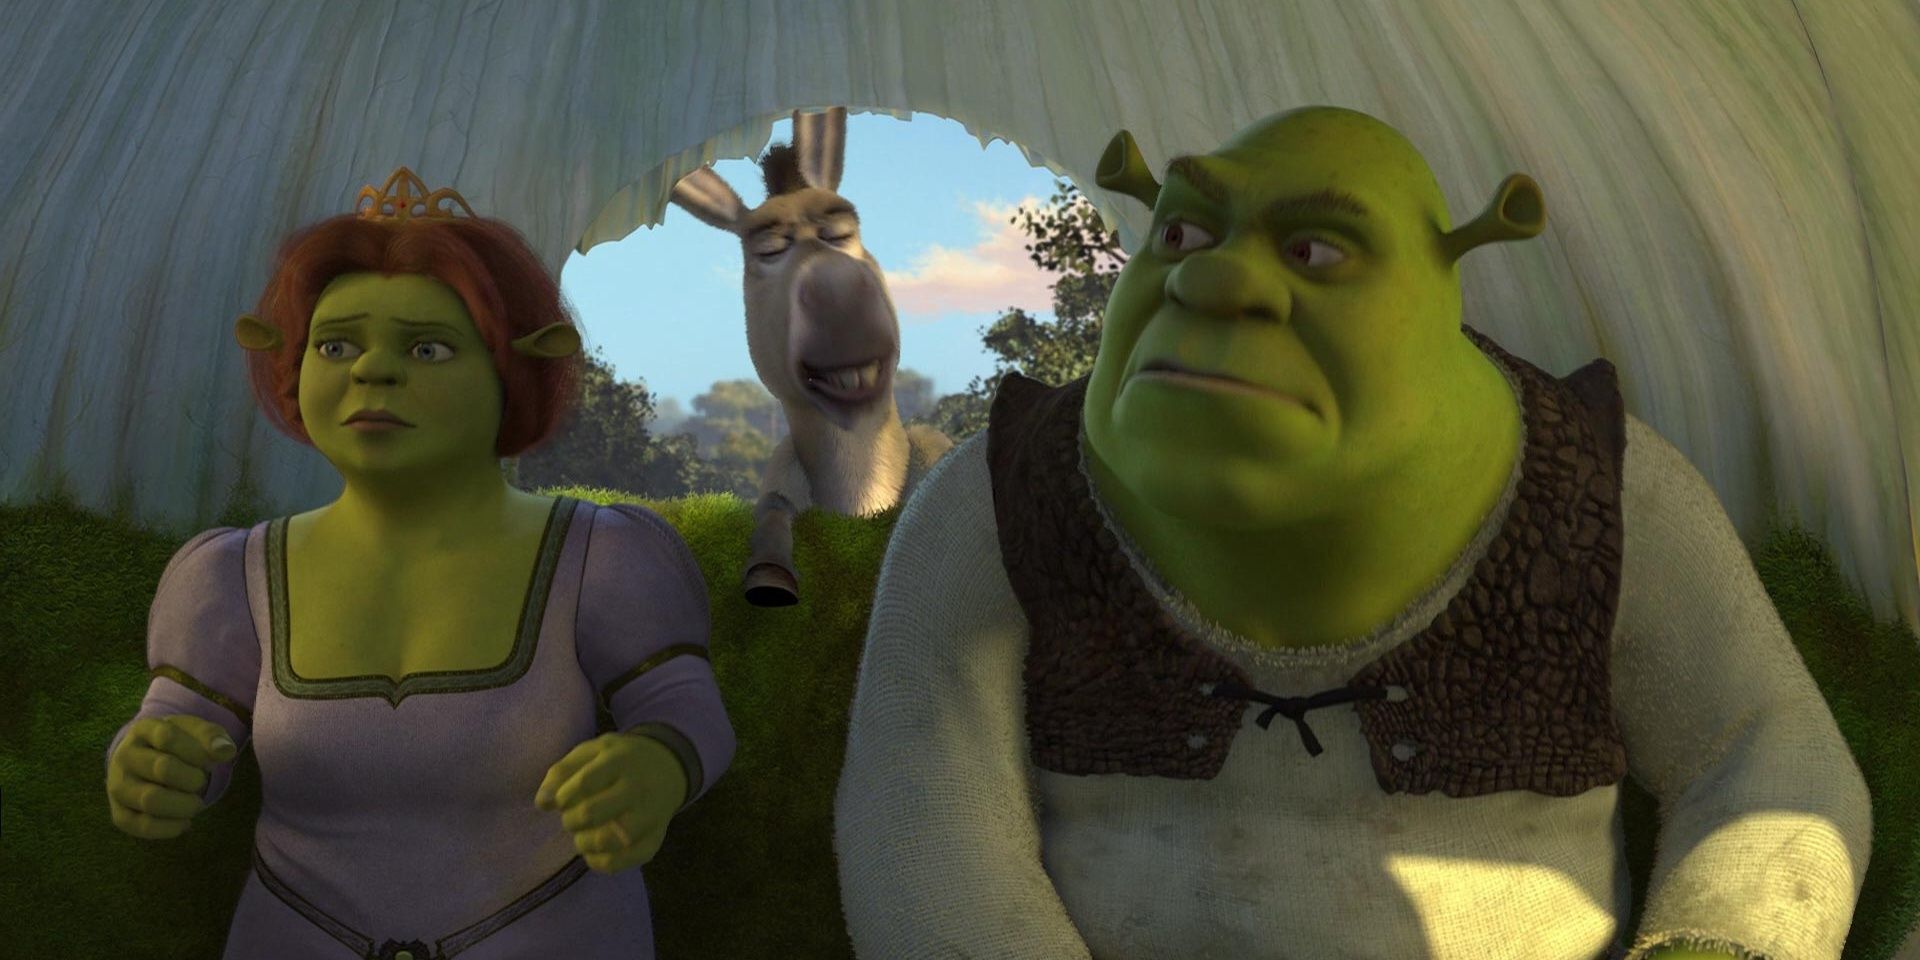 Shrek and Fiona annoyed by Donkey